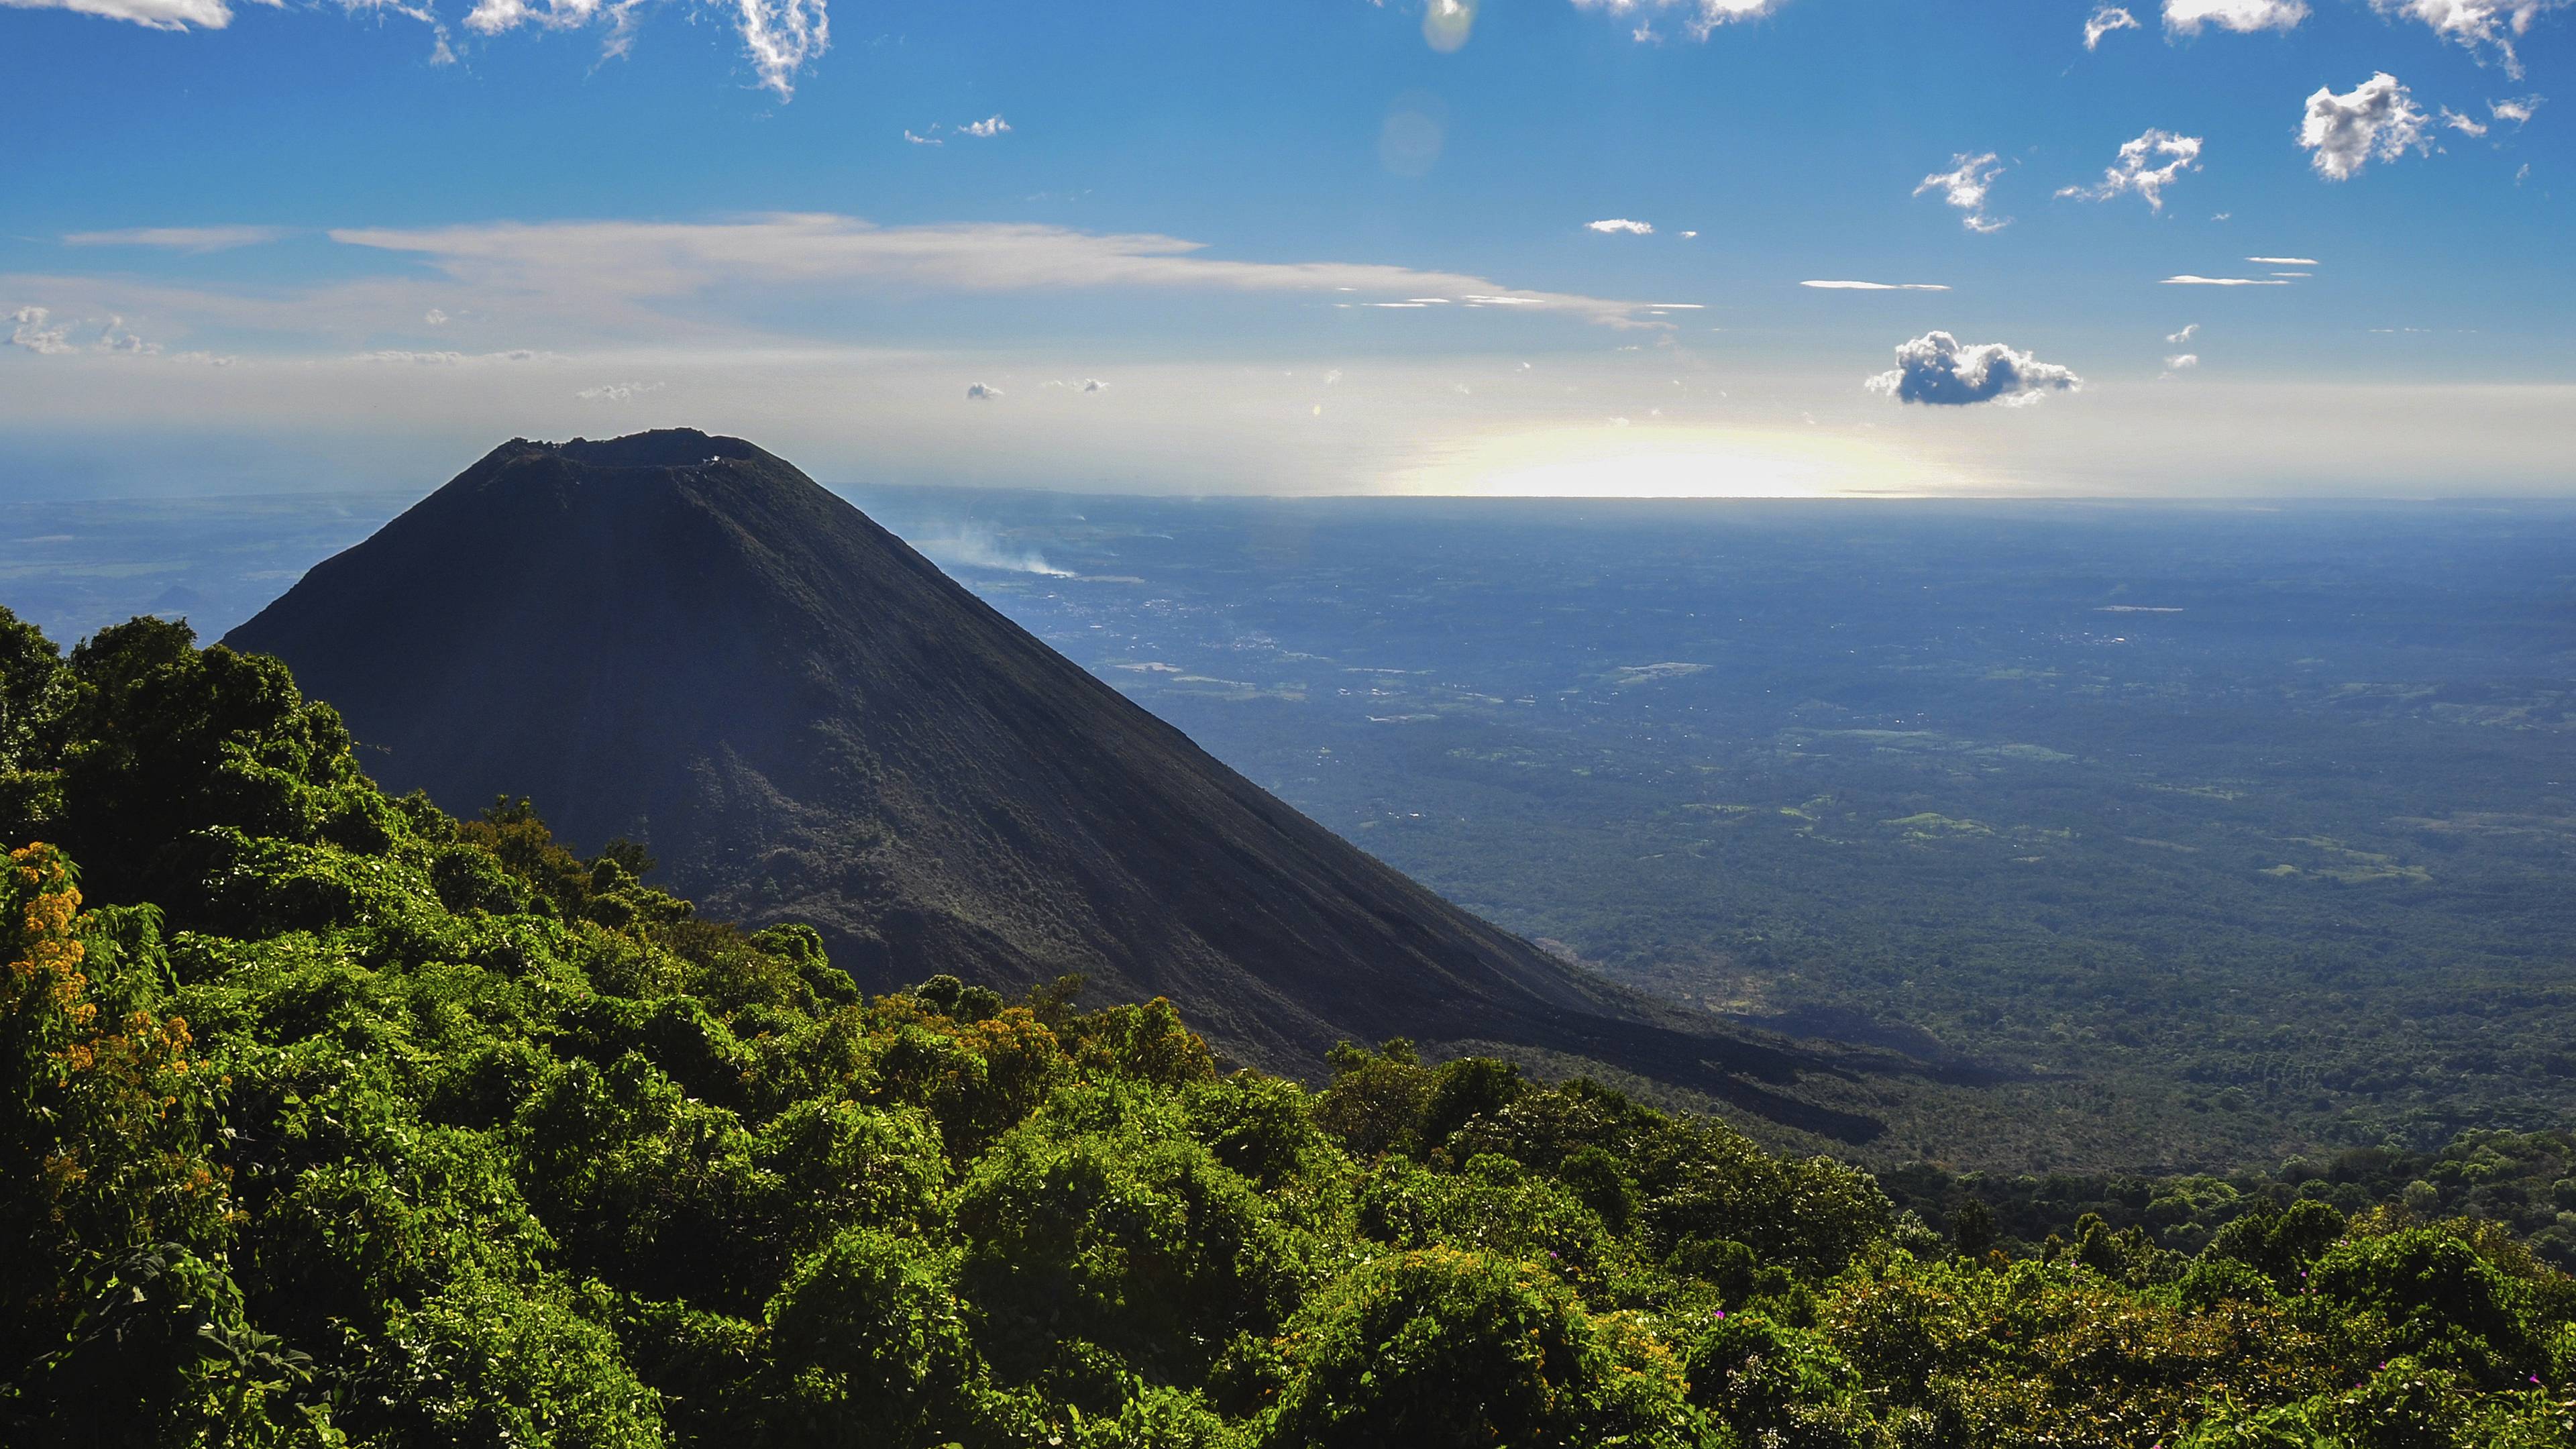 Le volcan Izalco domine le parc national Cerro Verde